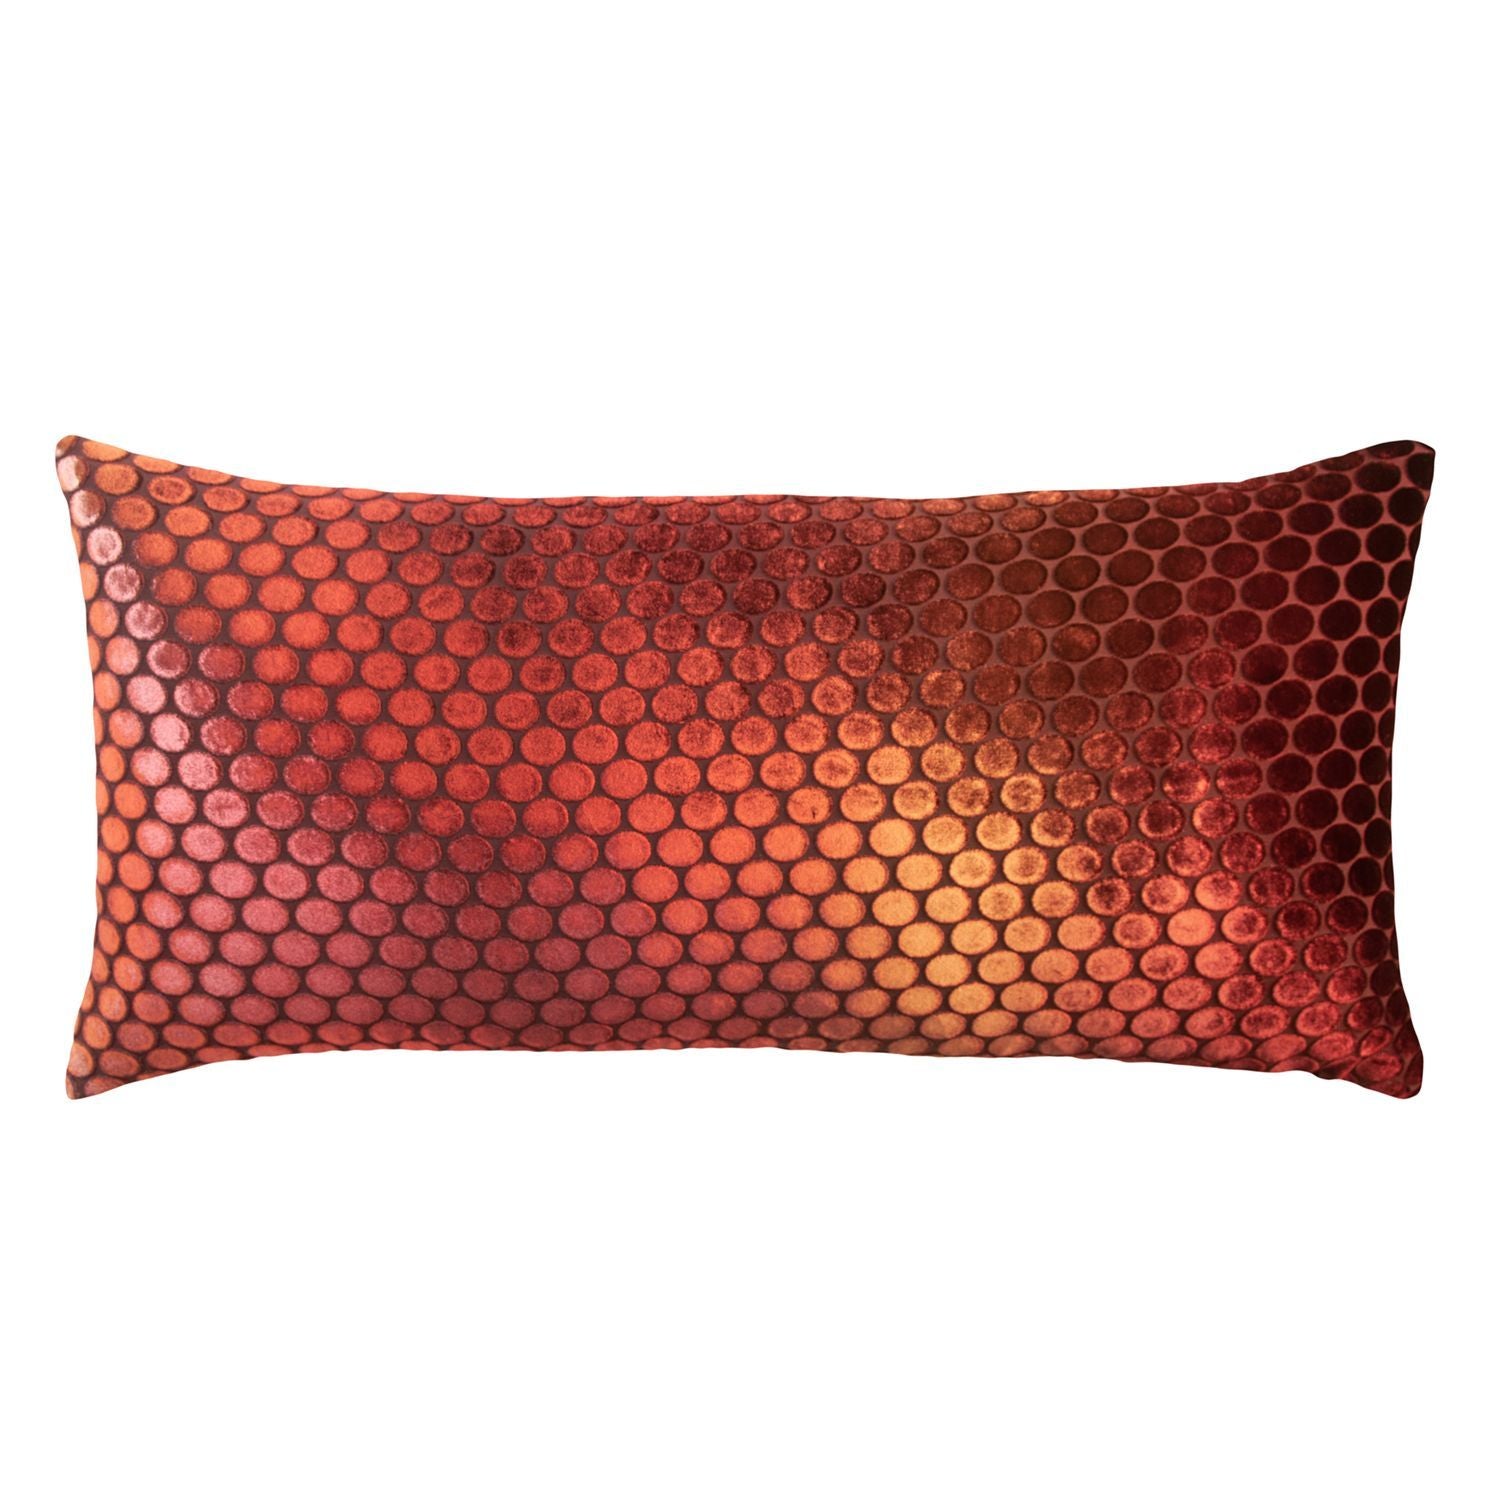 Fig Linens - Paprika Dots Boudoir Pillow by Kevin O'Brien Studio 